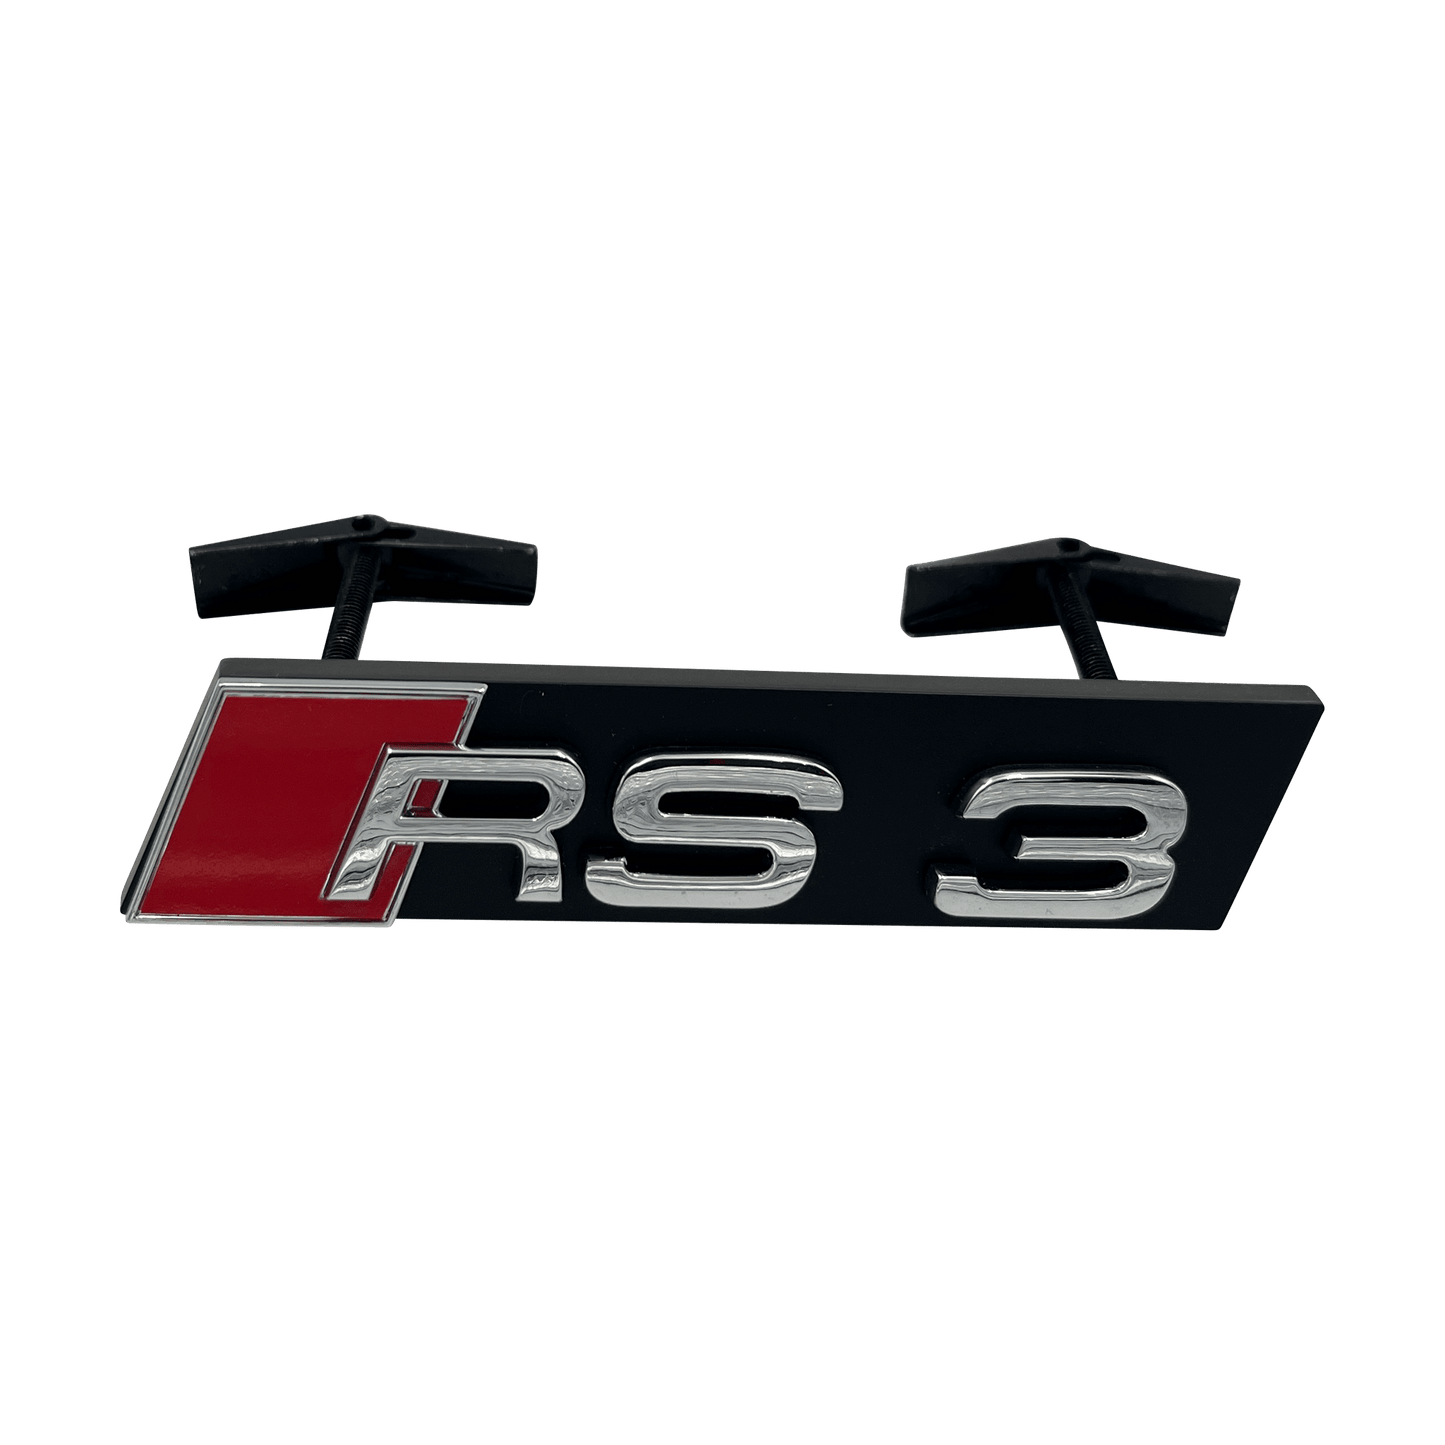 Chrome Audi RS3 Front Emblem Badge 